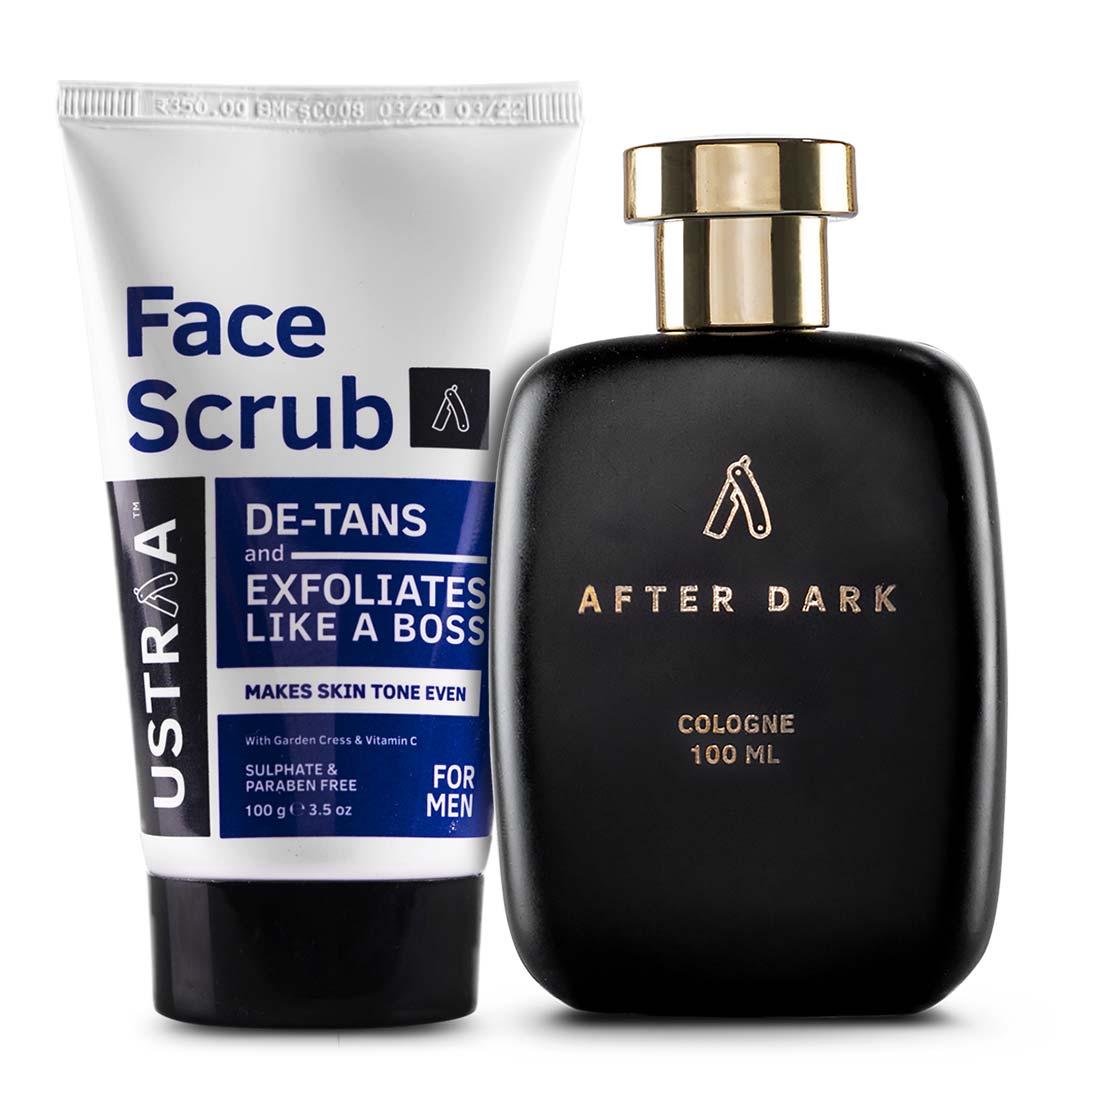 After Dark Cologne- Perfume for Men -100ml & Face Scrub for de-Tan - 100g